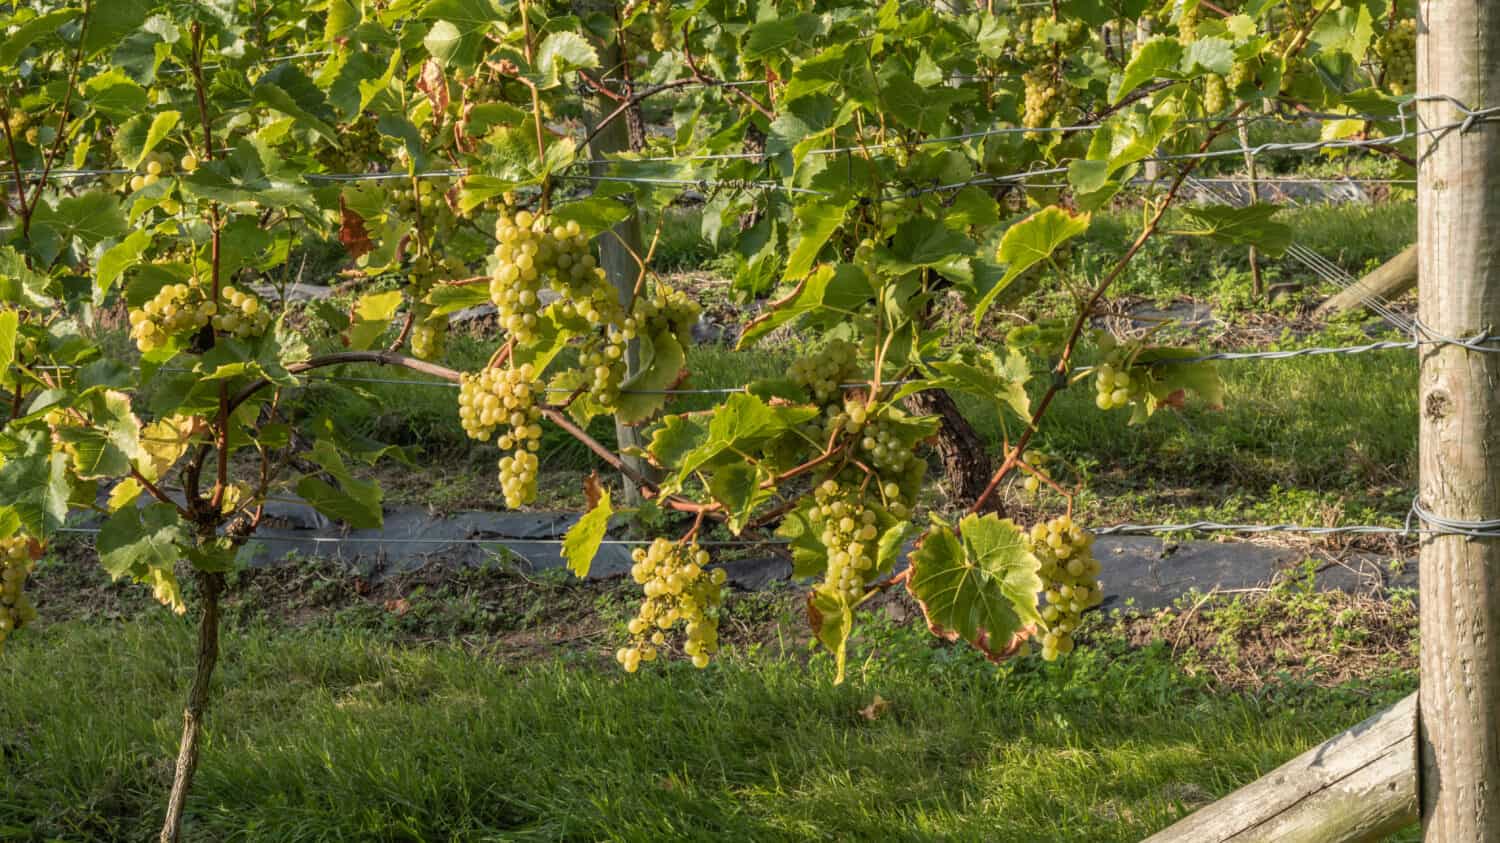 Seyval Blanc grapes hanging on a vine